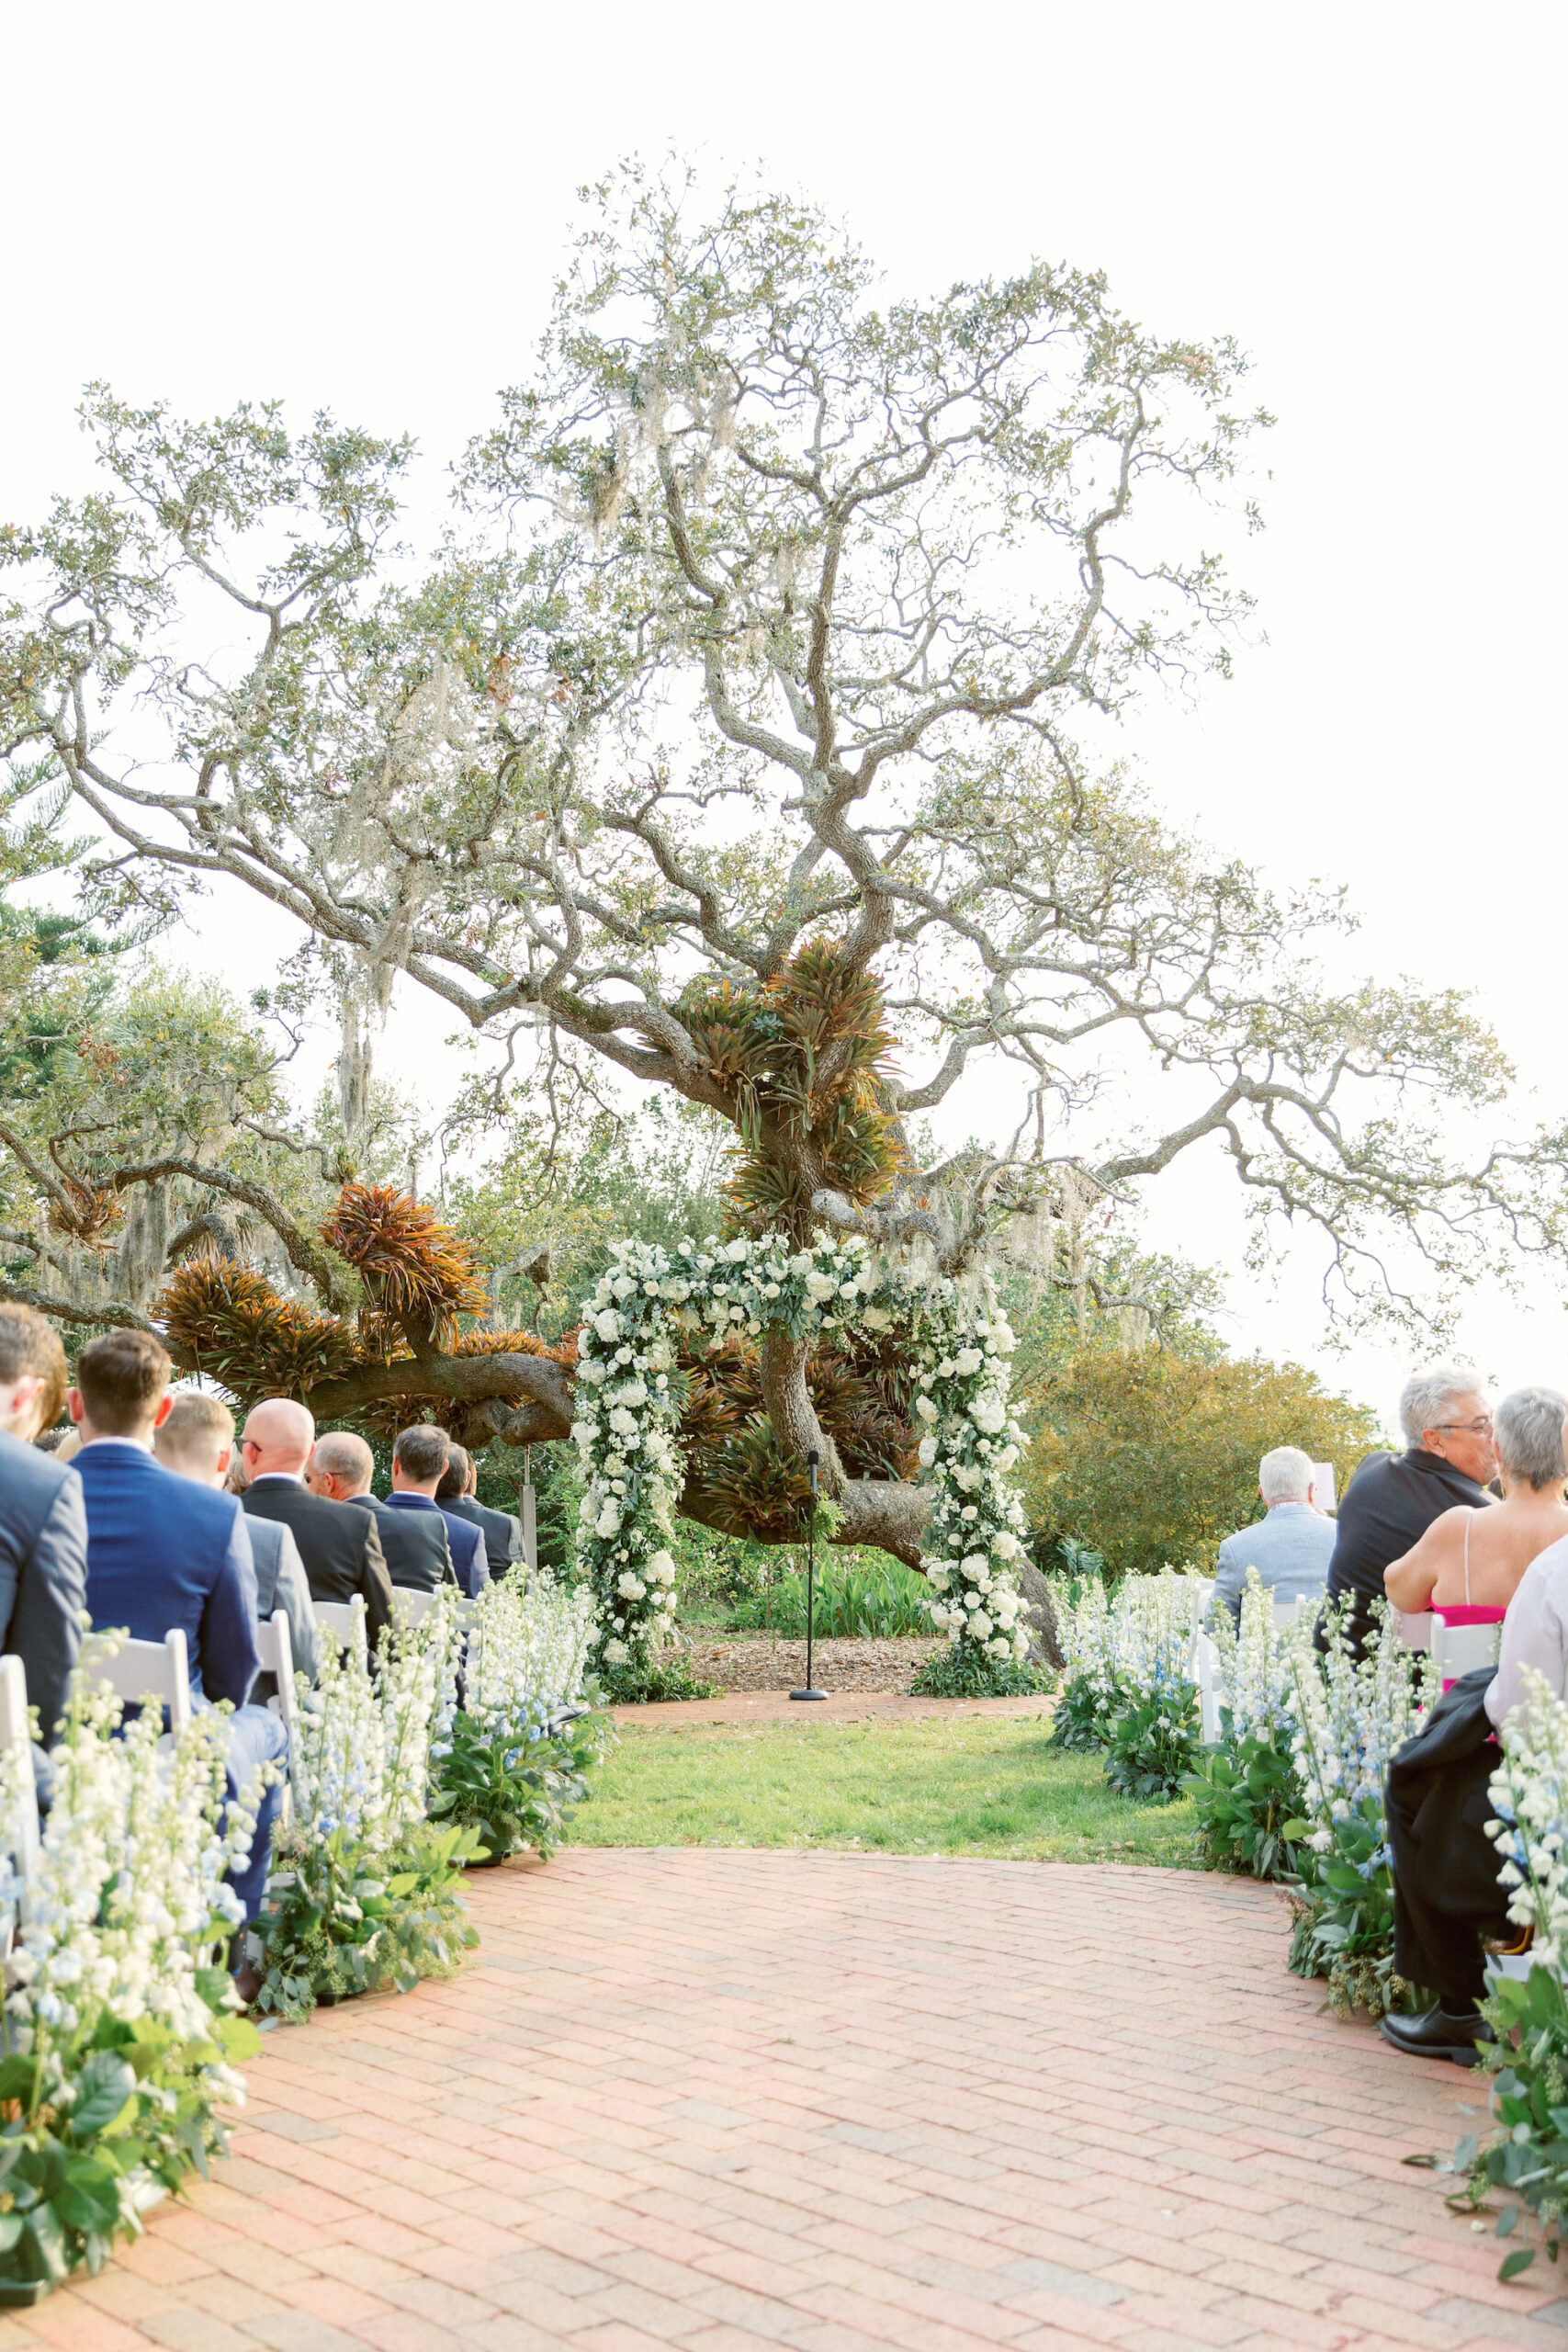 Outdoor Spring Wedding Ceremony Garden Inspiration | White and Greenery Floral Arch and Aisle Floral Arrangements | Sarasota Florist Botanica International Design Studio